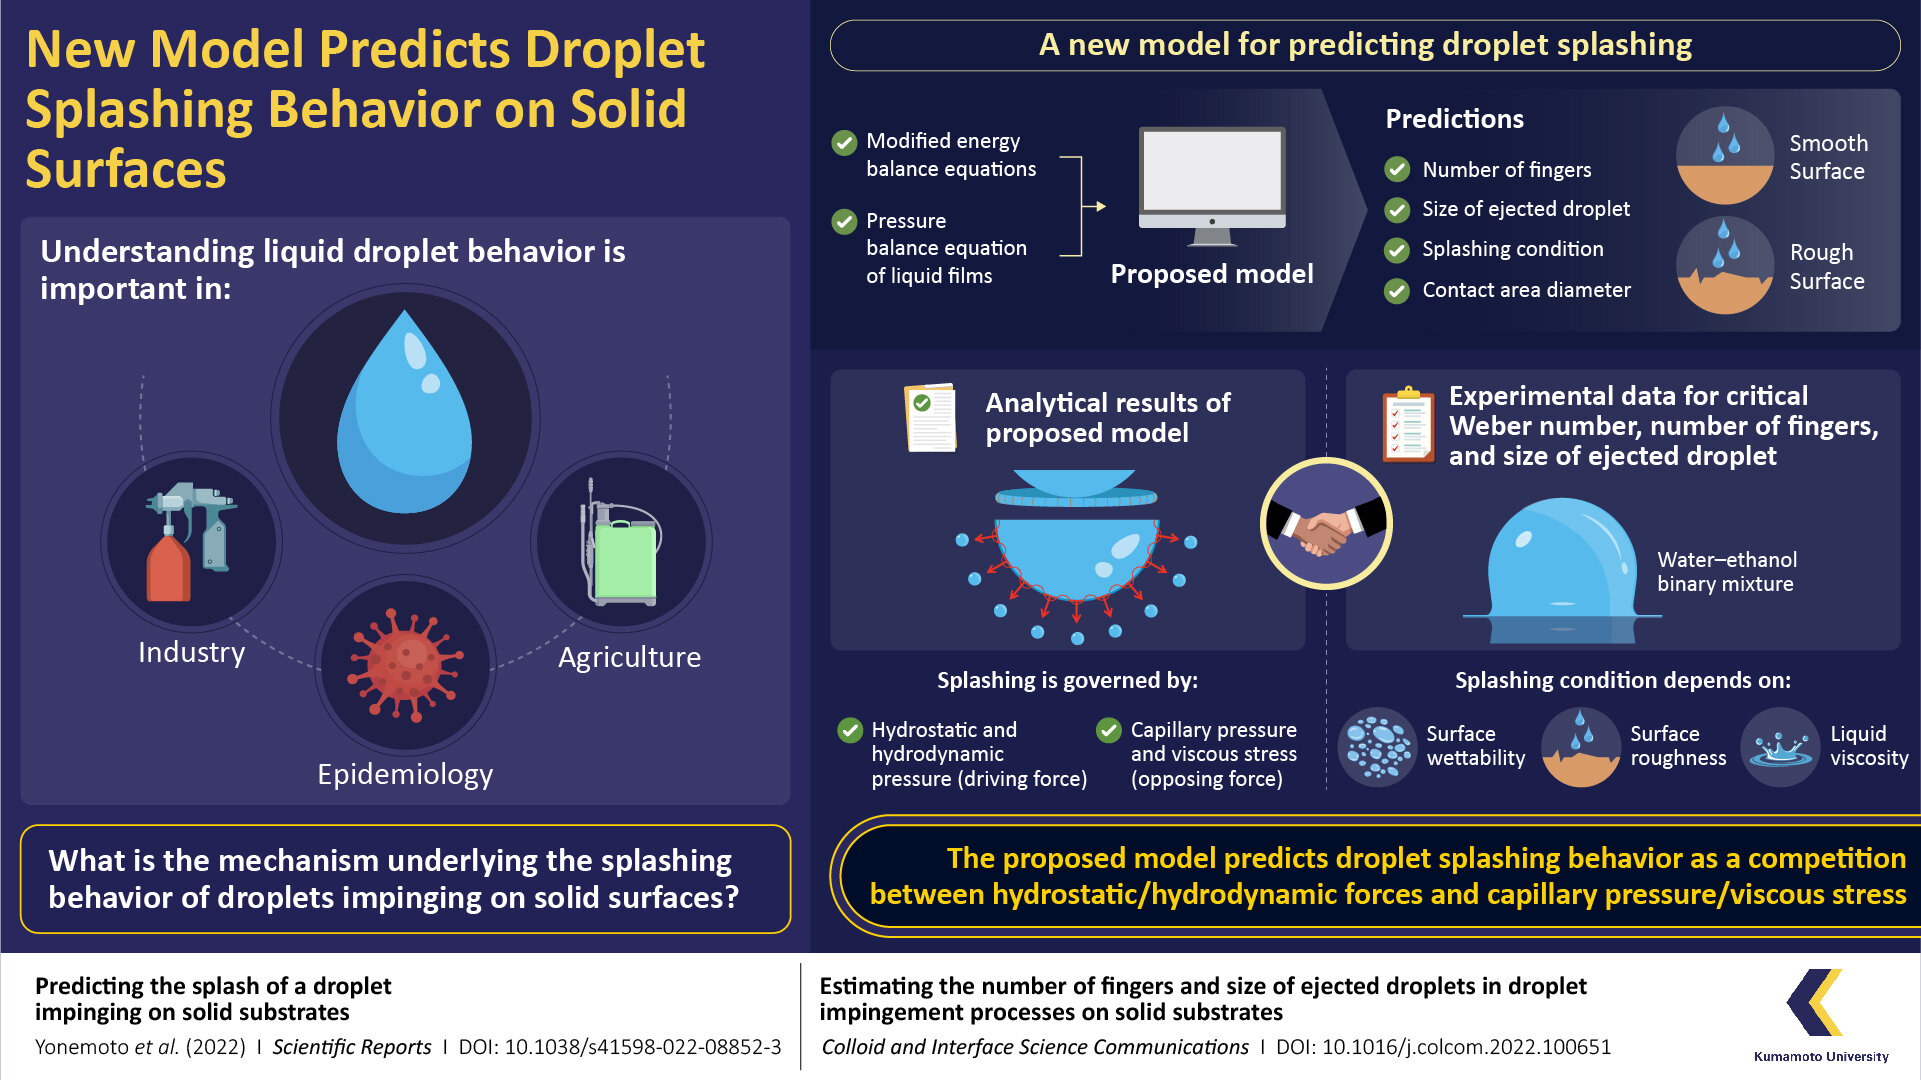 Big splash: Scientists present a new model for predicting droplet splashing behavior on solid surfaces